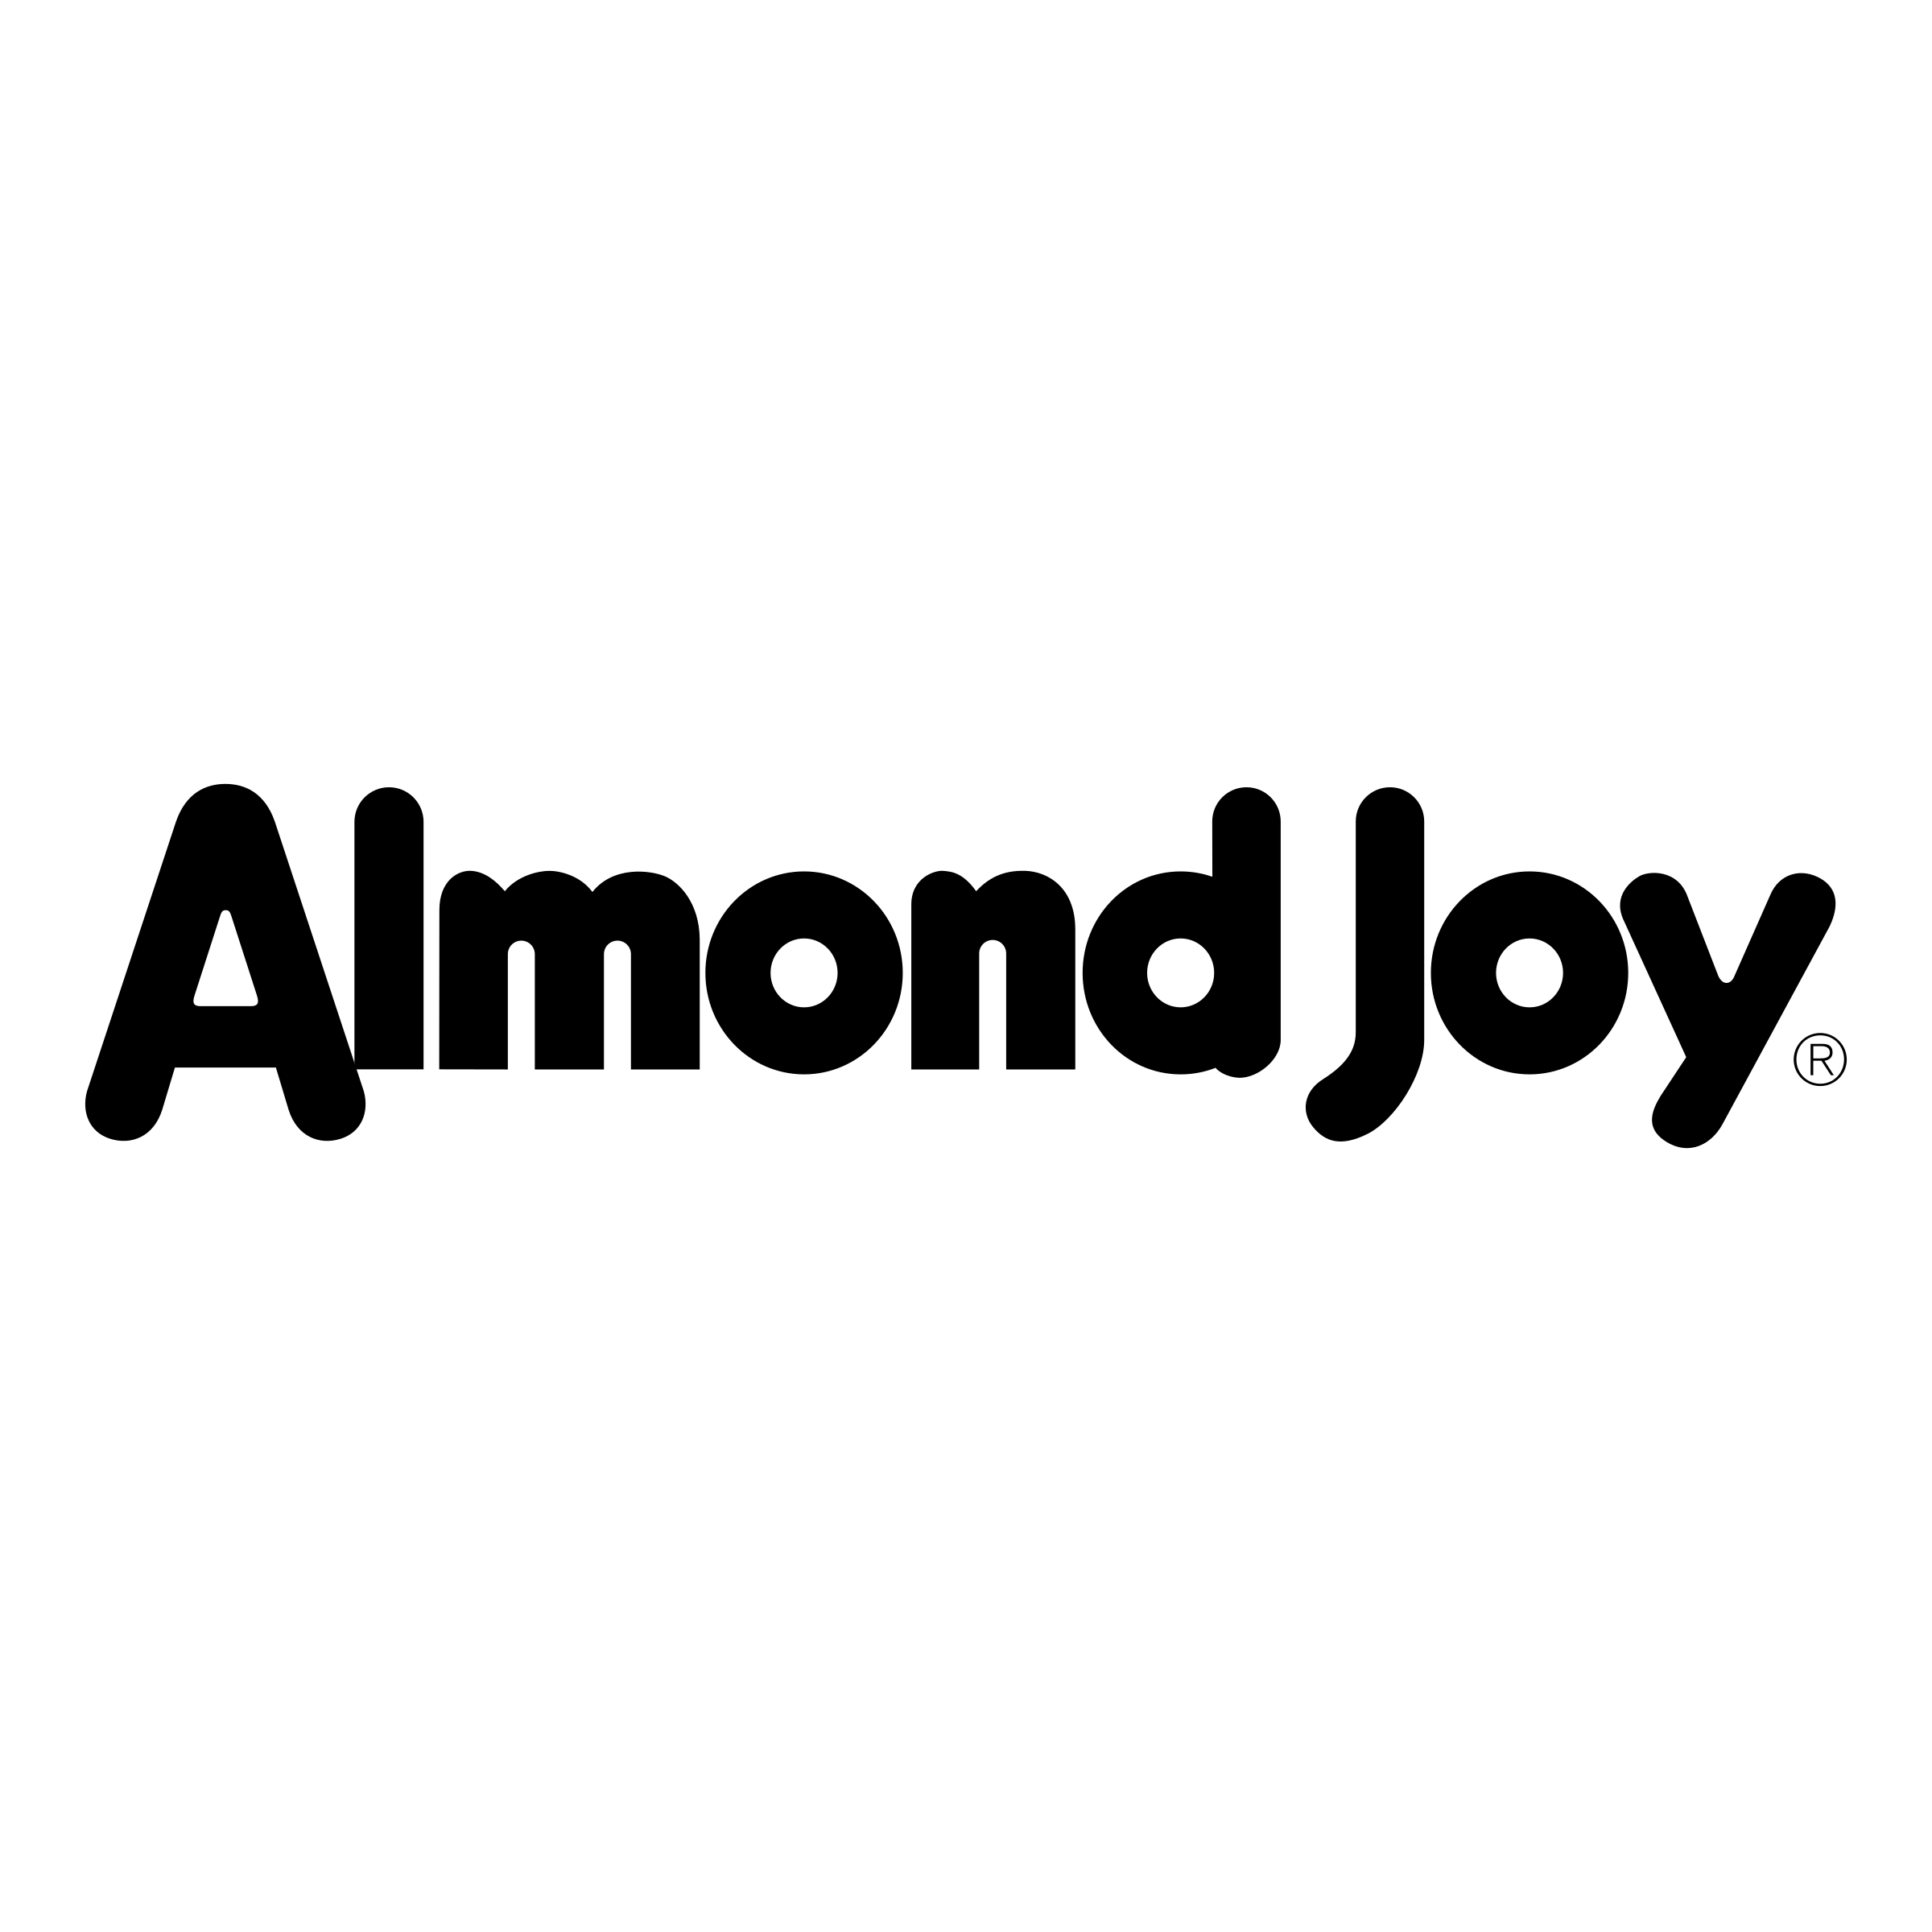 Joy Logo - Almond Joy Logo PNG Transparent & SVG Vector - Freebie Supply